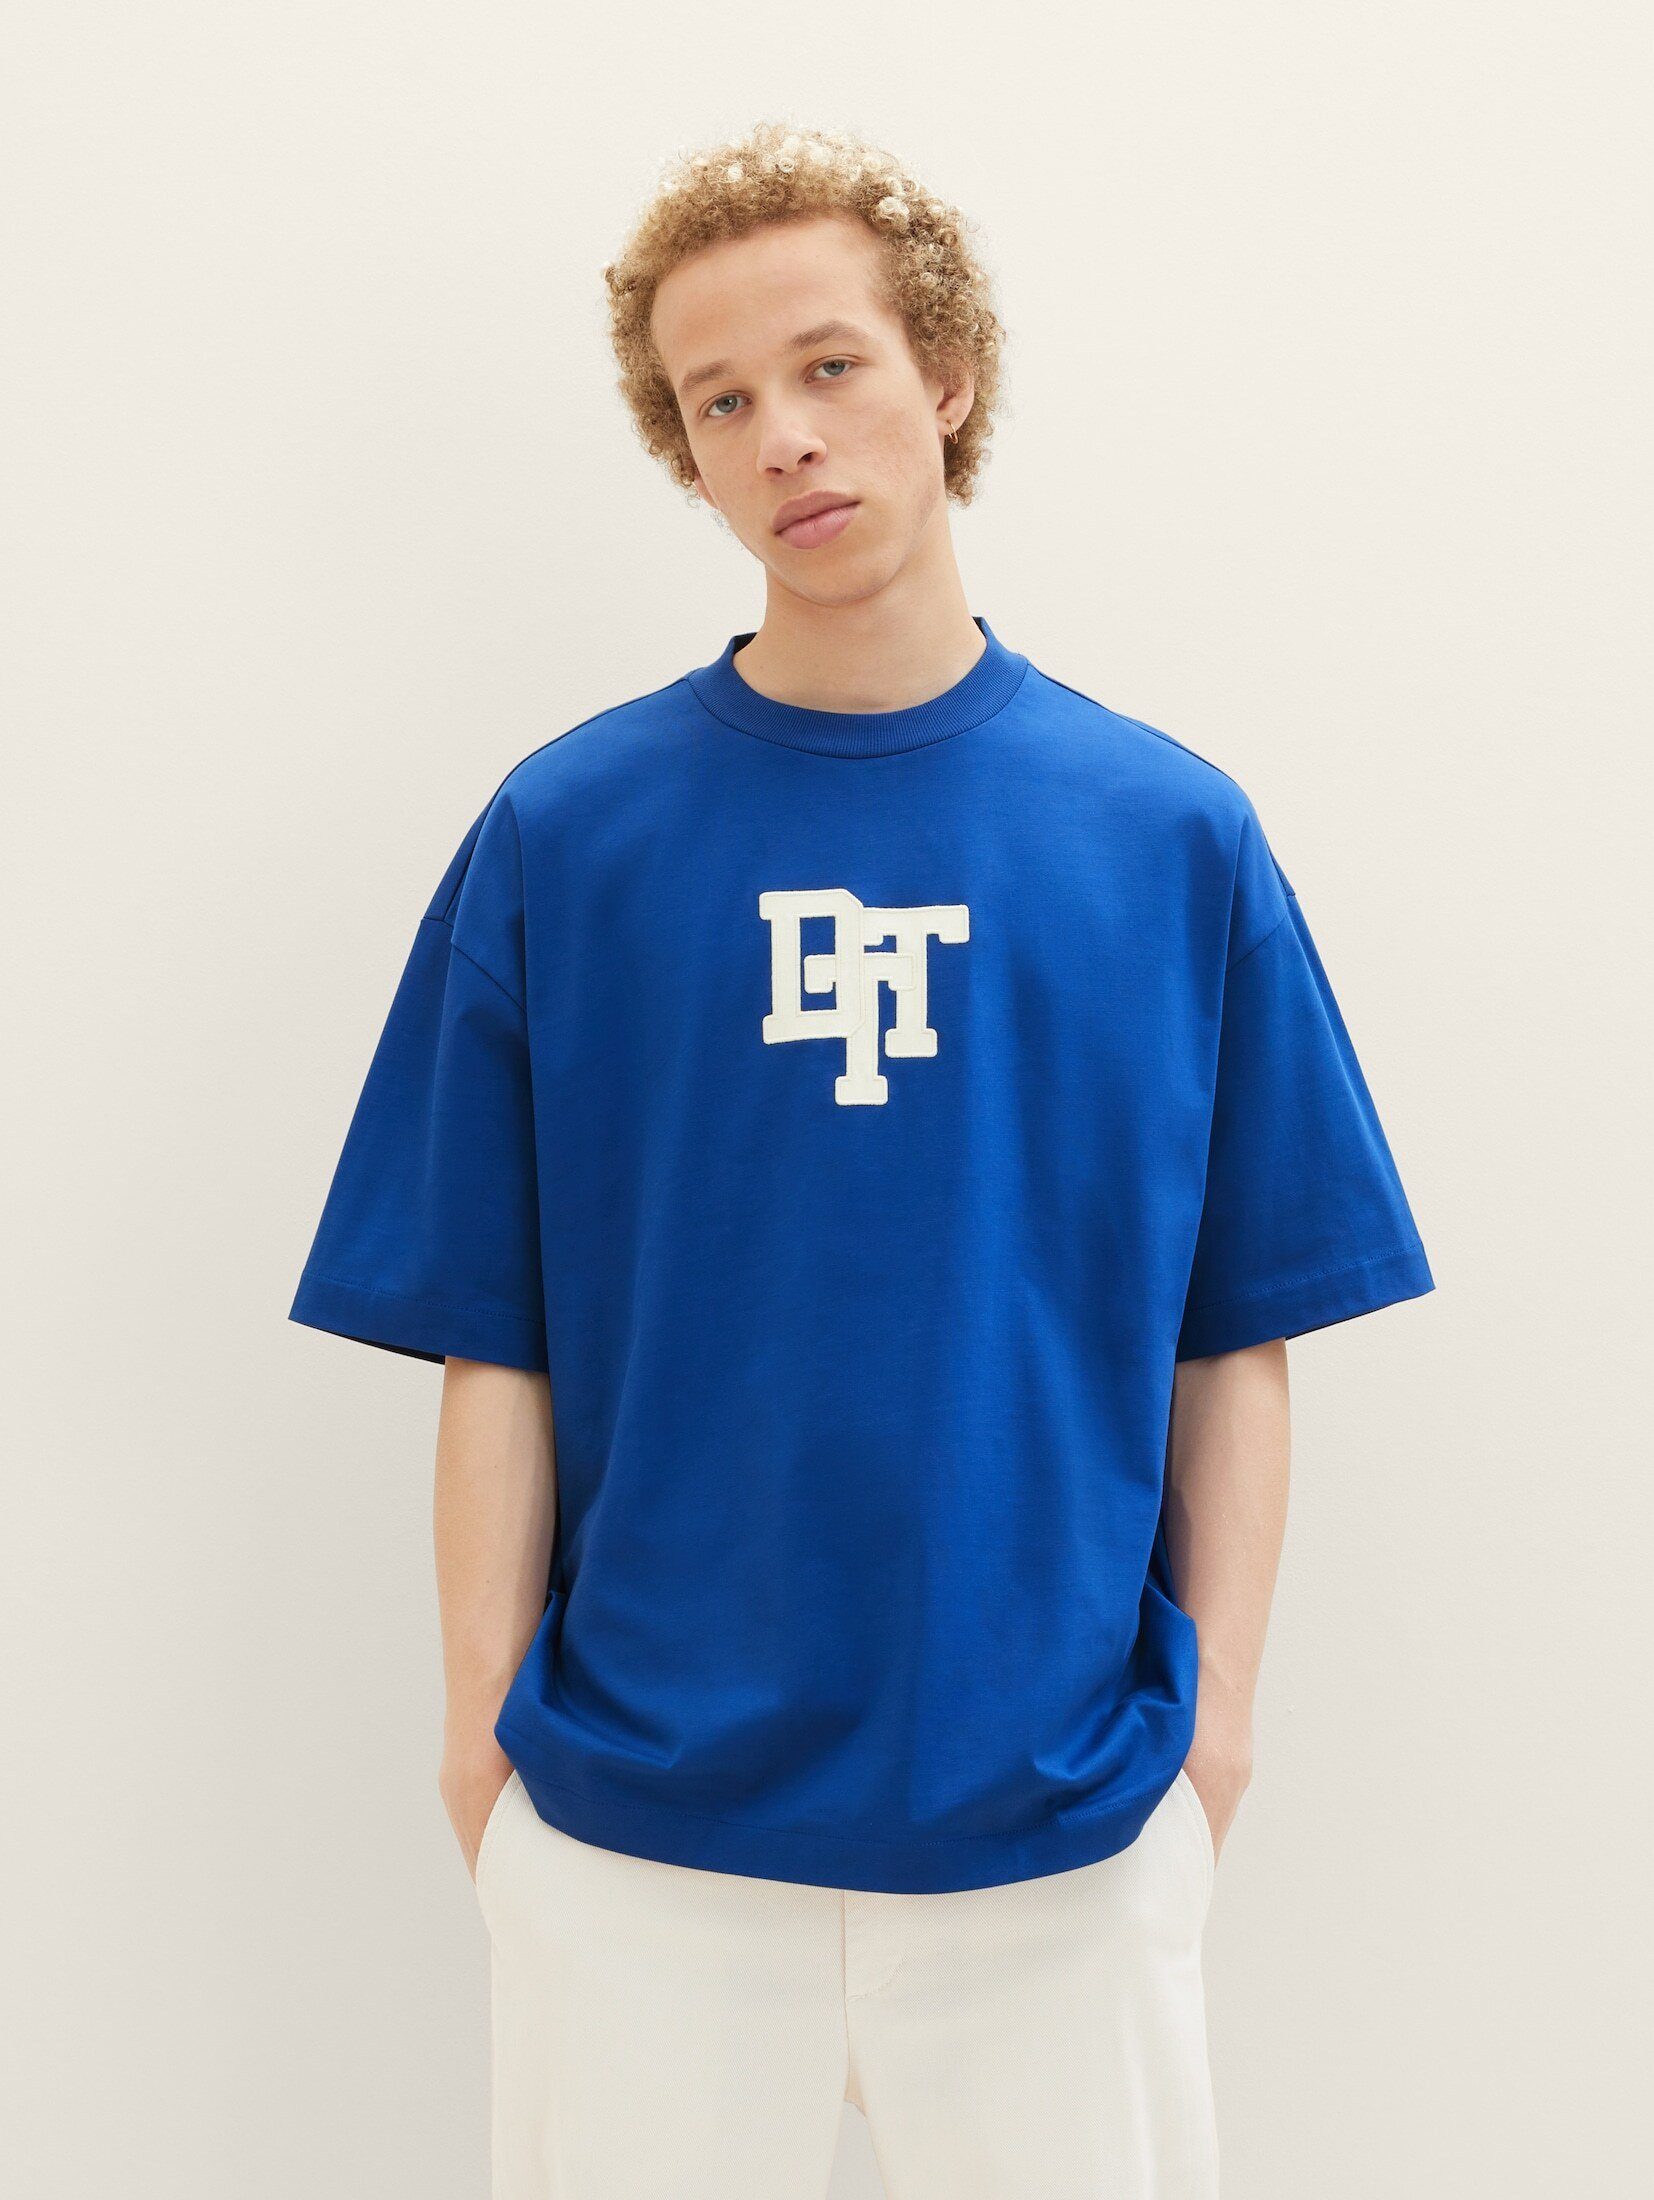 TOM TAILOR Denim T-Shirt Oversized blue T-Shirt Applikation royal mit shiny